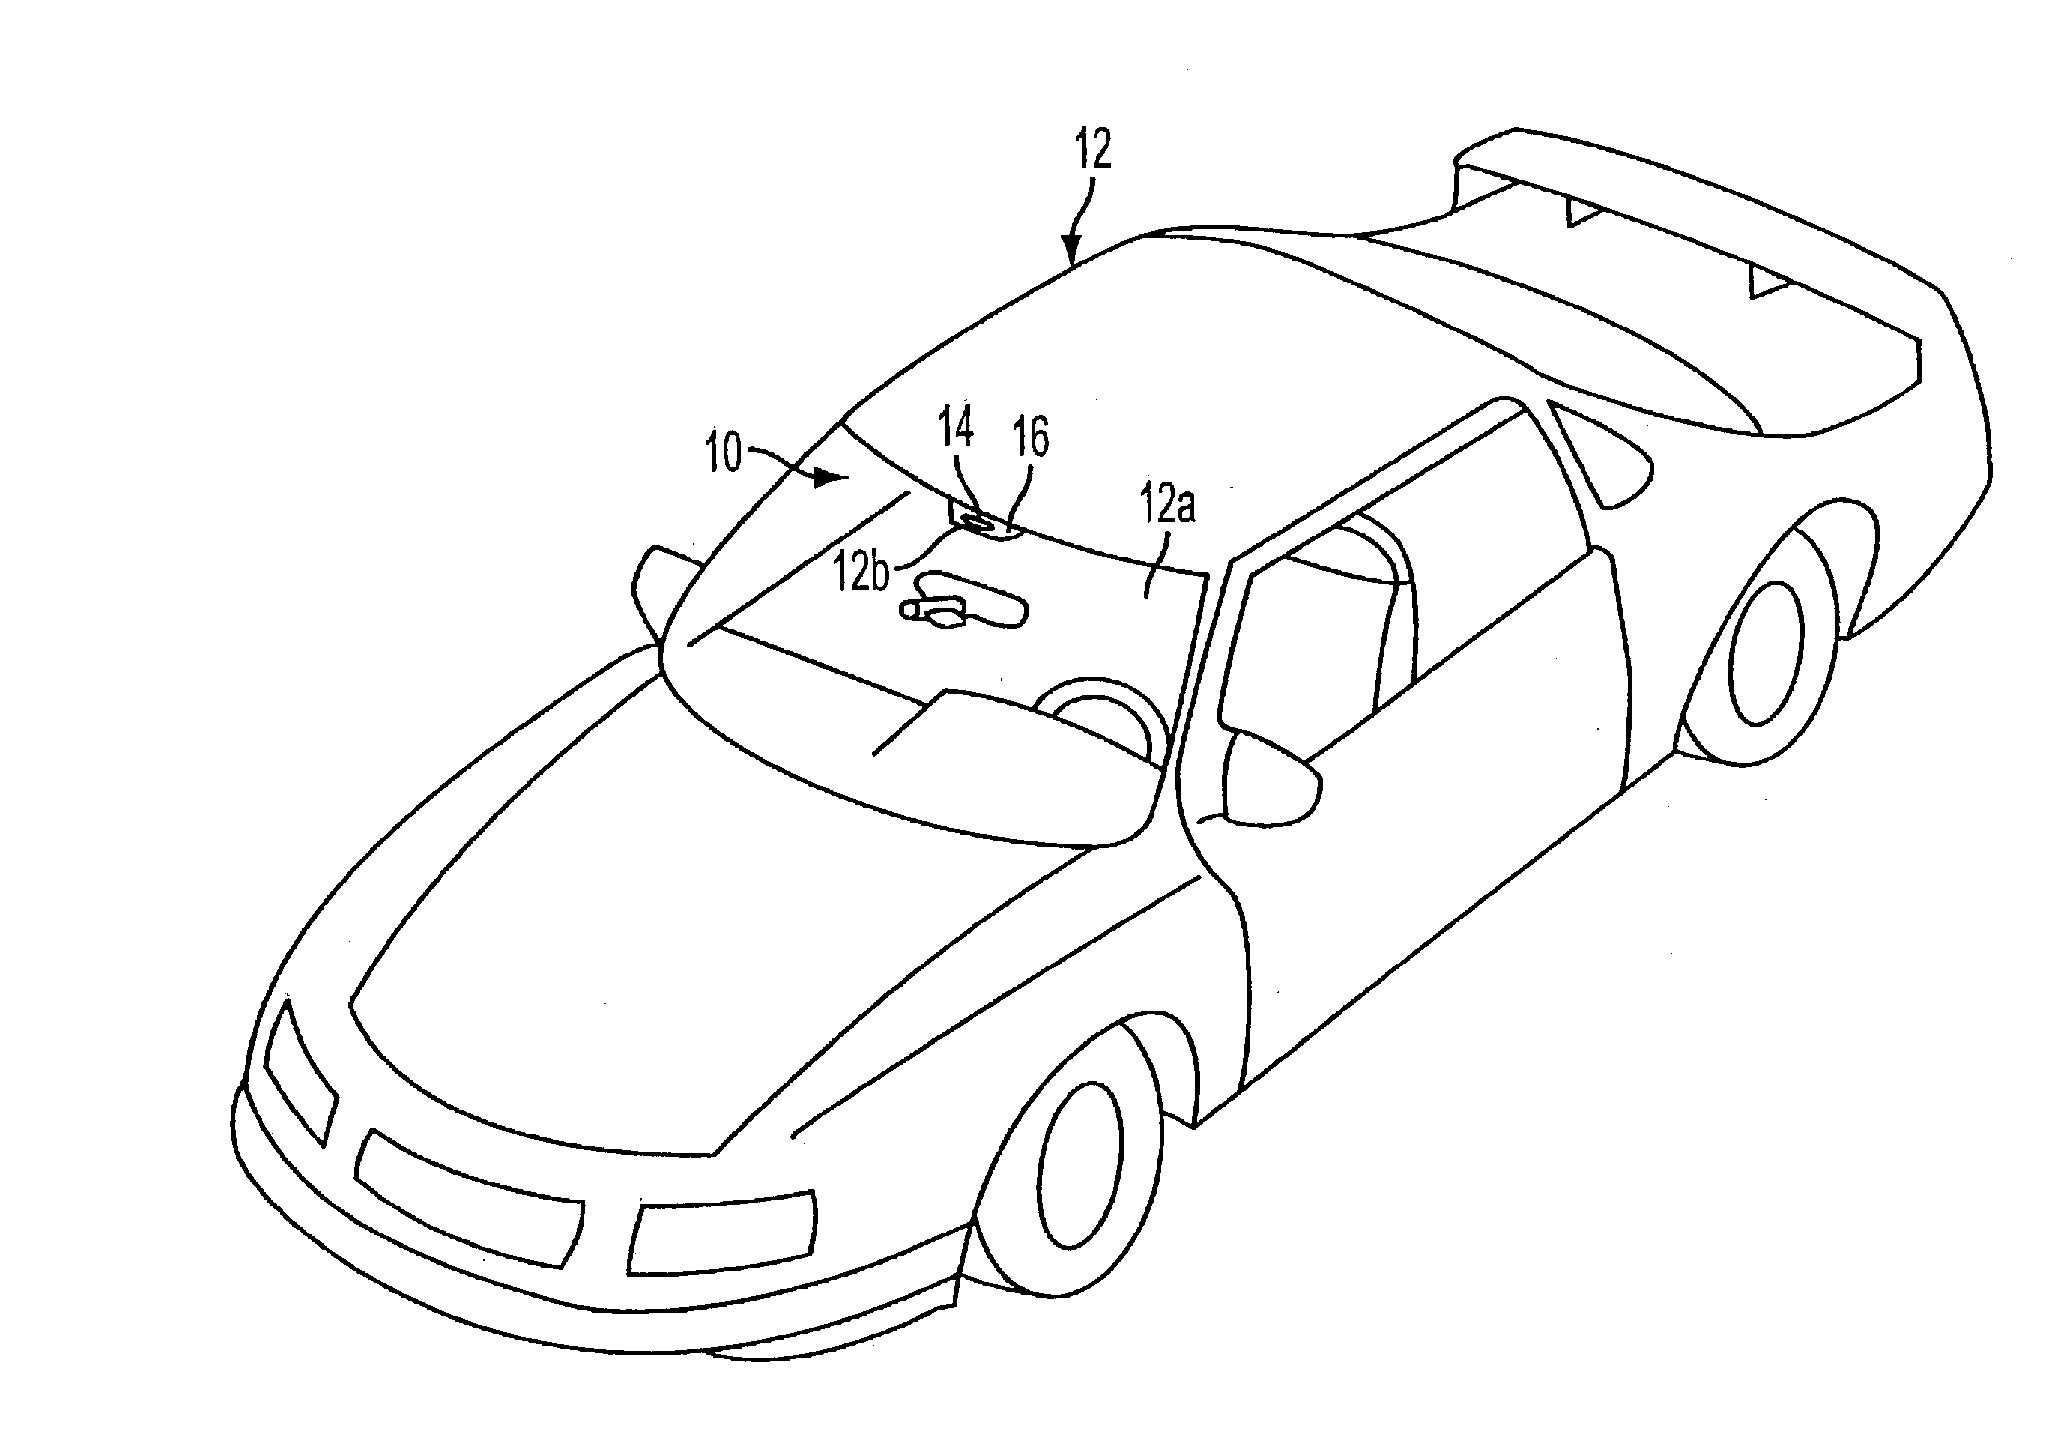 Radar Sensing System for Vehicle